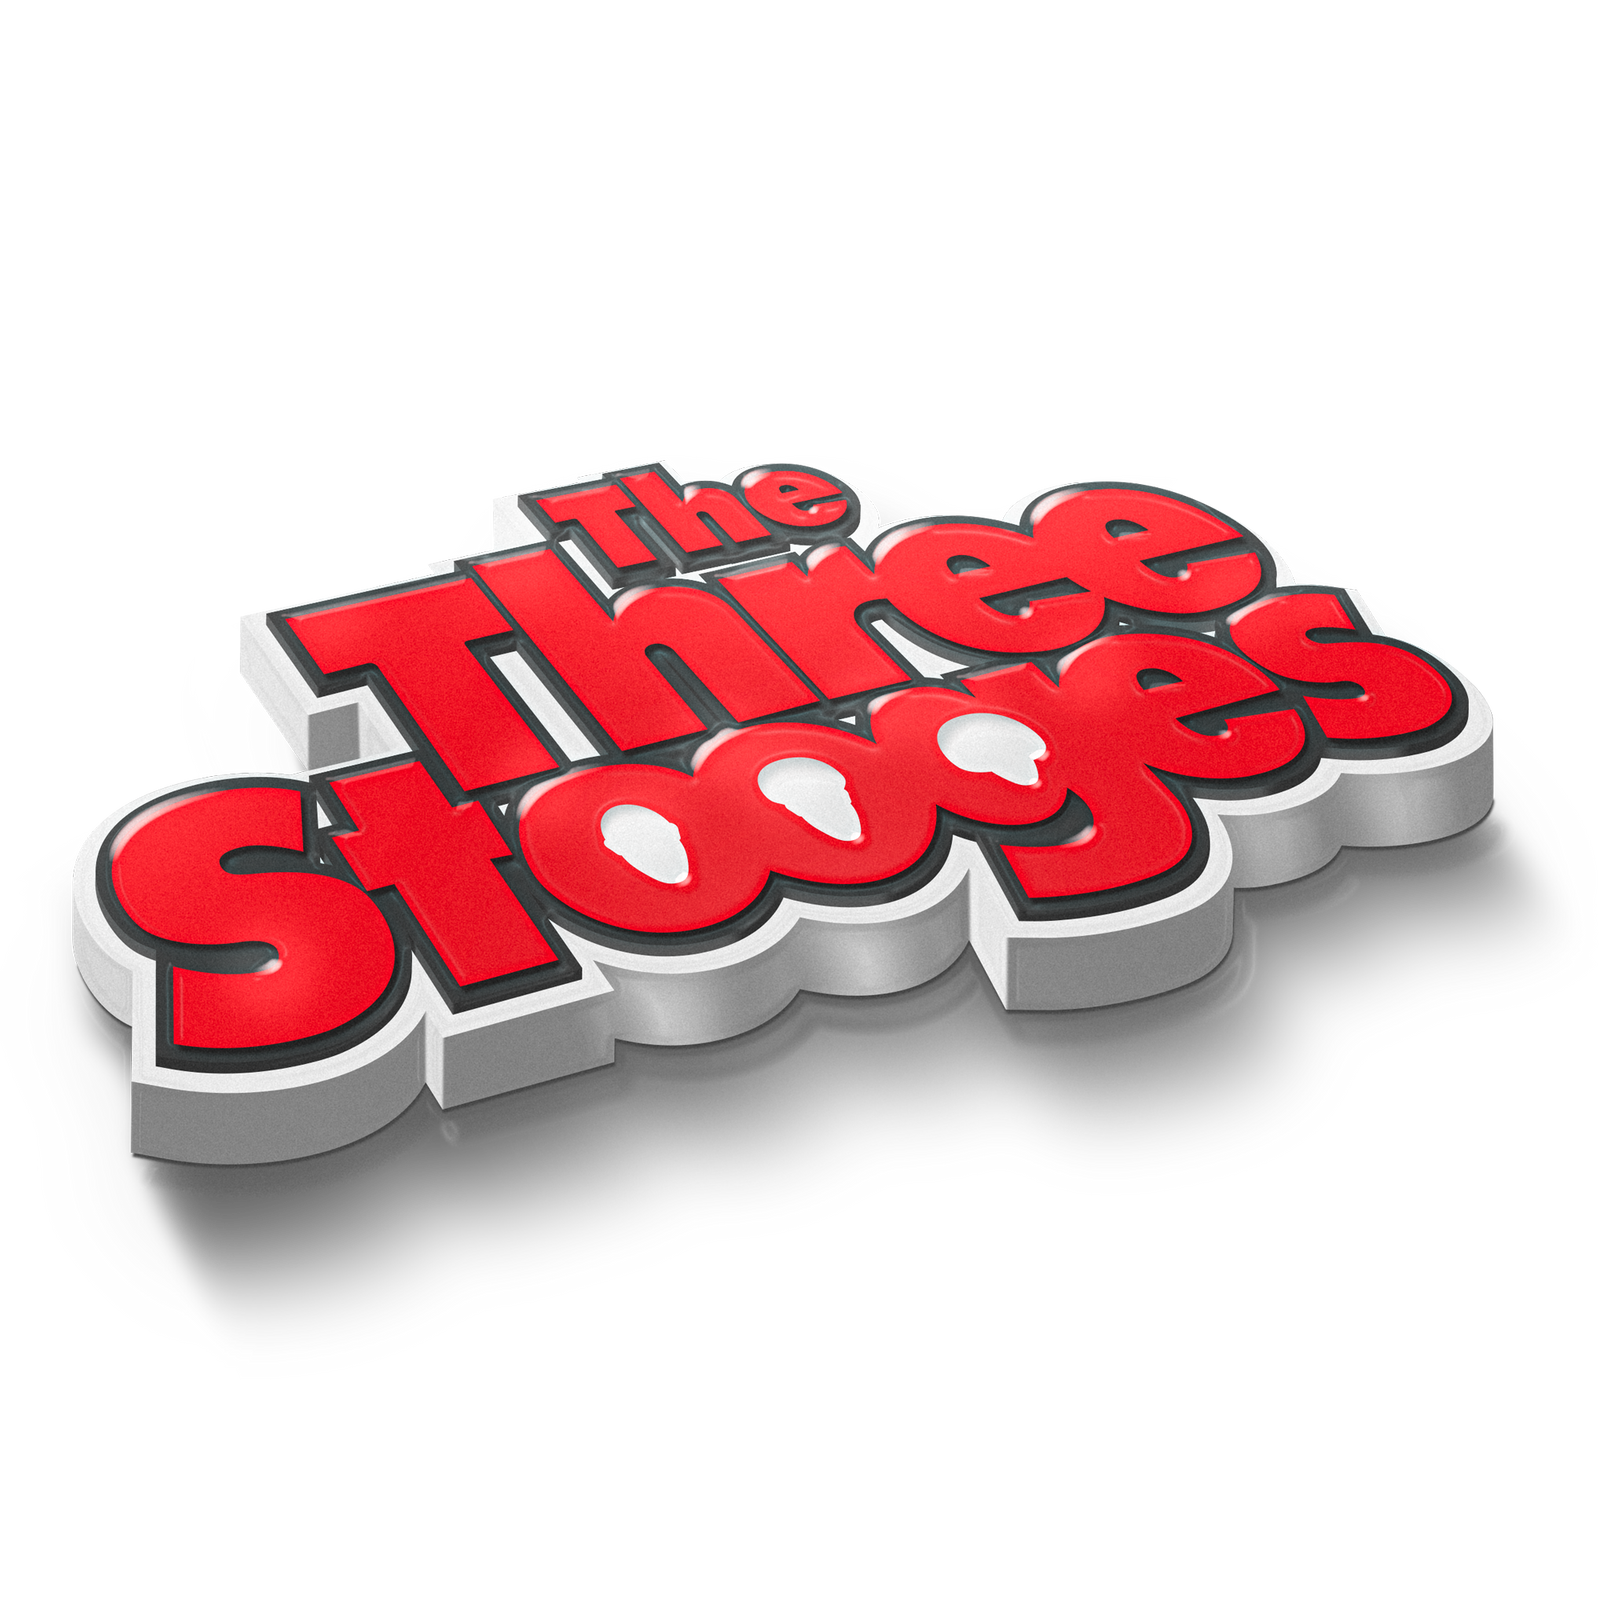 The Three Stooges logo.